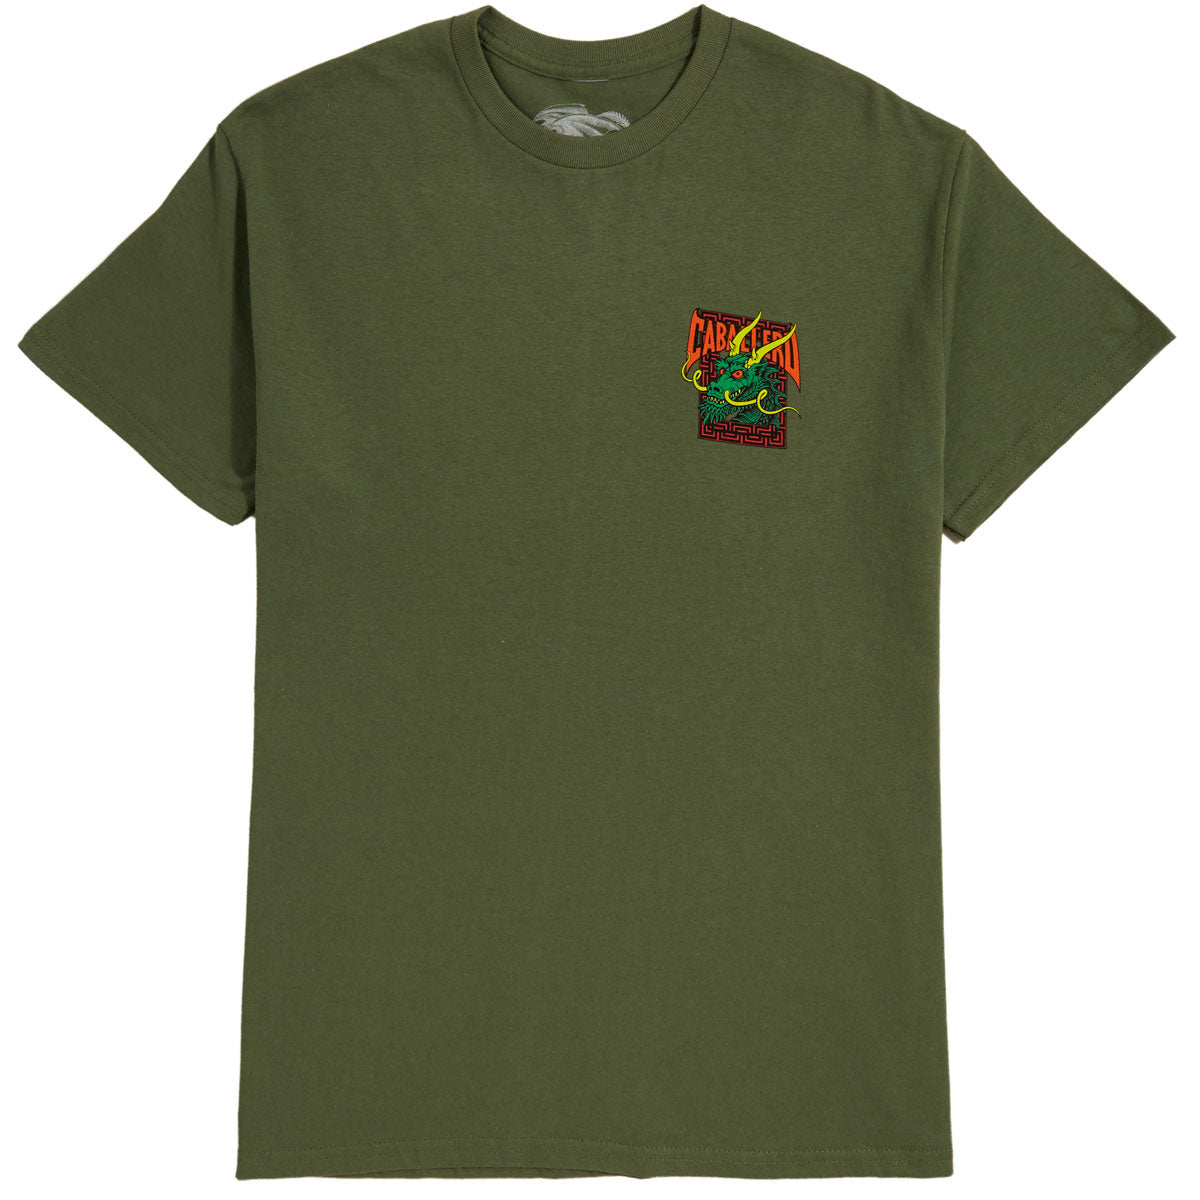 Powell-Peralta Caballero Street Dragon T-Shirt - Military Green image 2